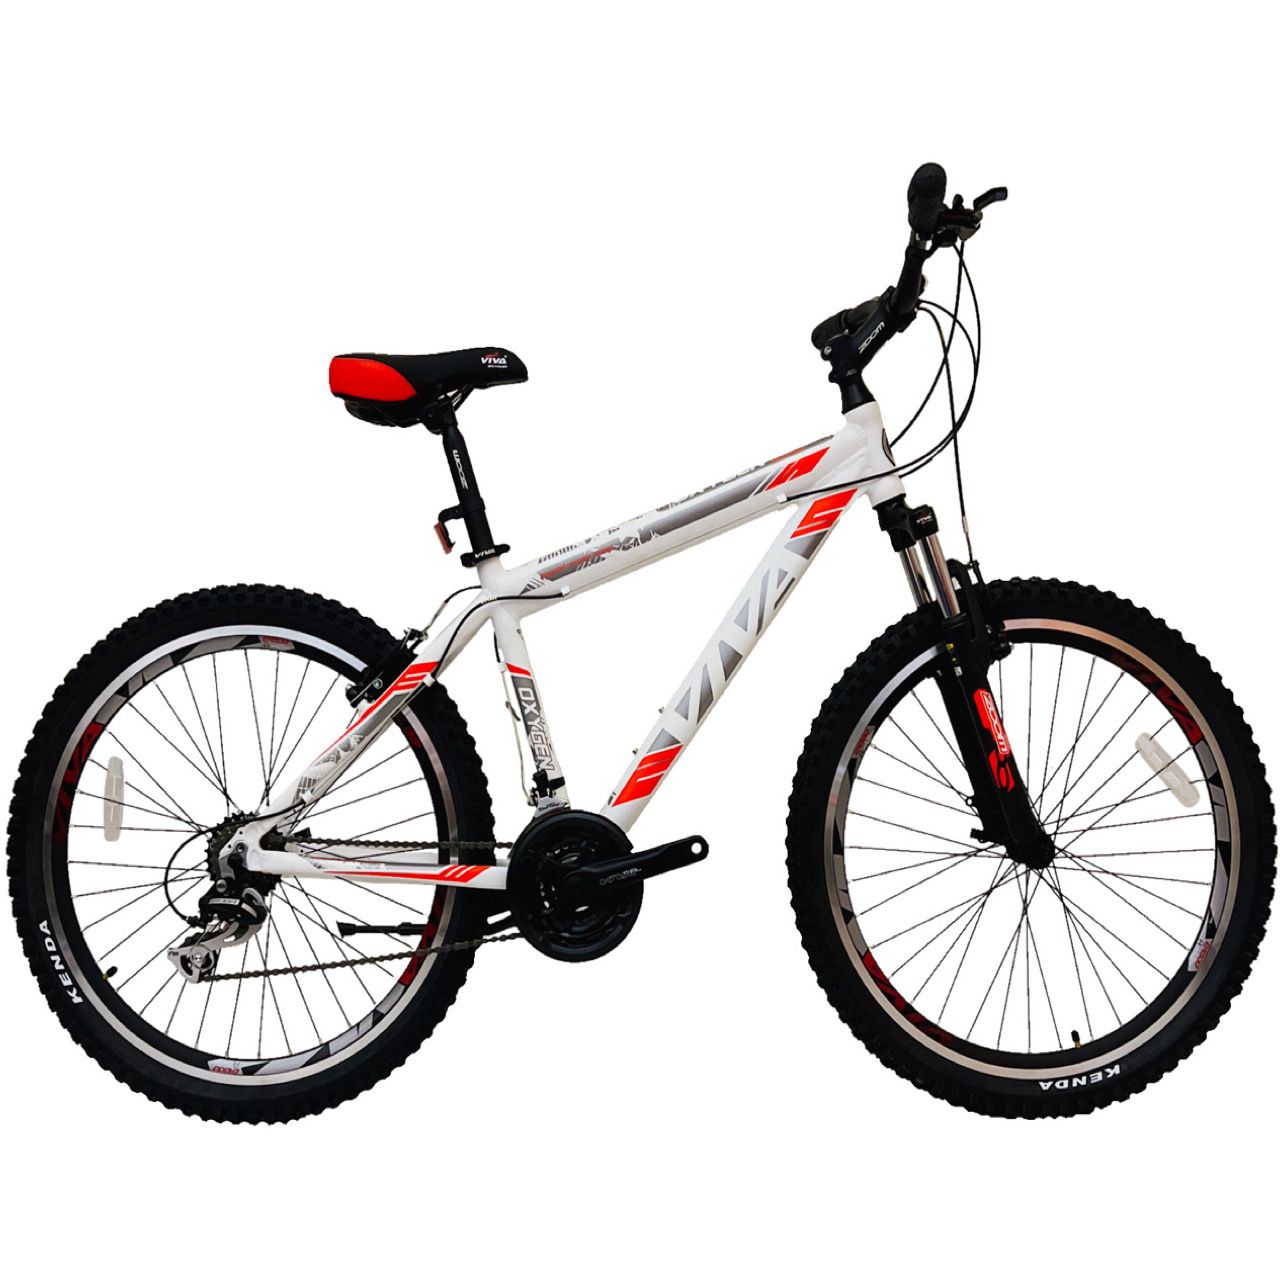 دوچرخه کوهستان ویوا مدل OXYGEN کد 100 سایز 26 -  - 2